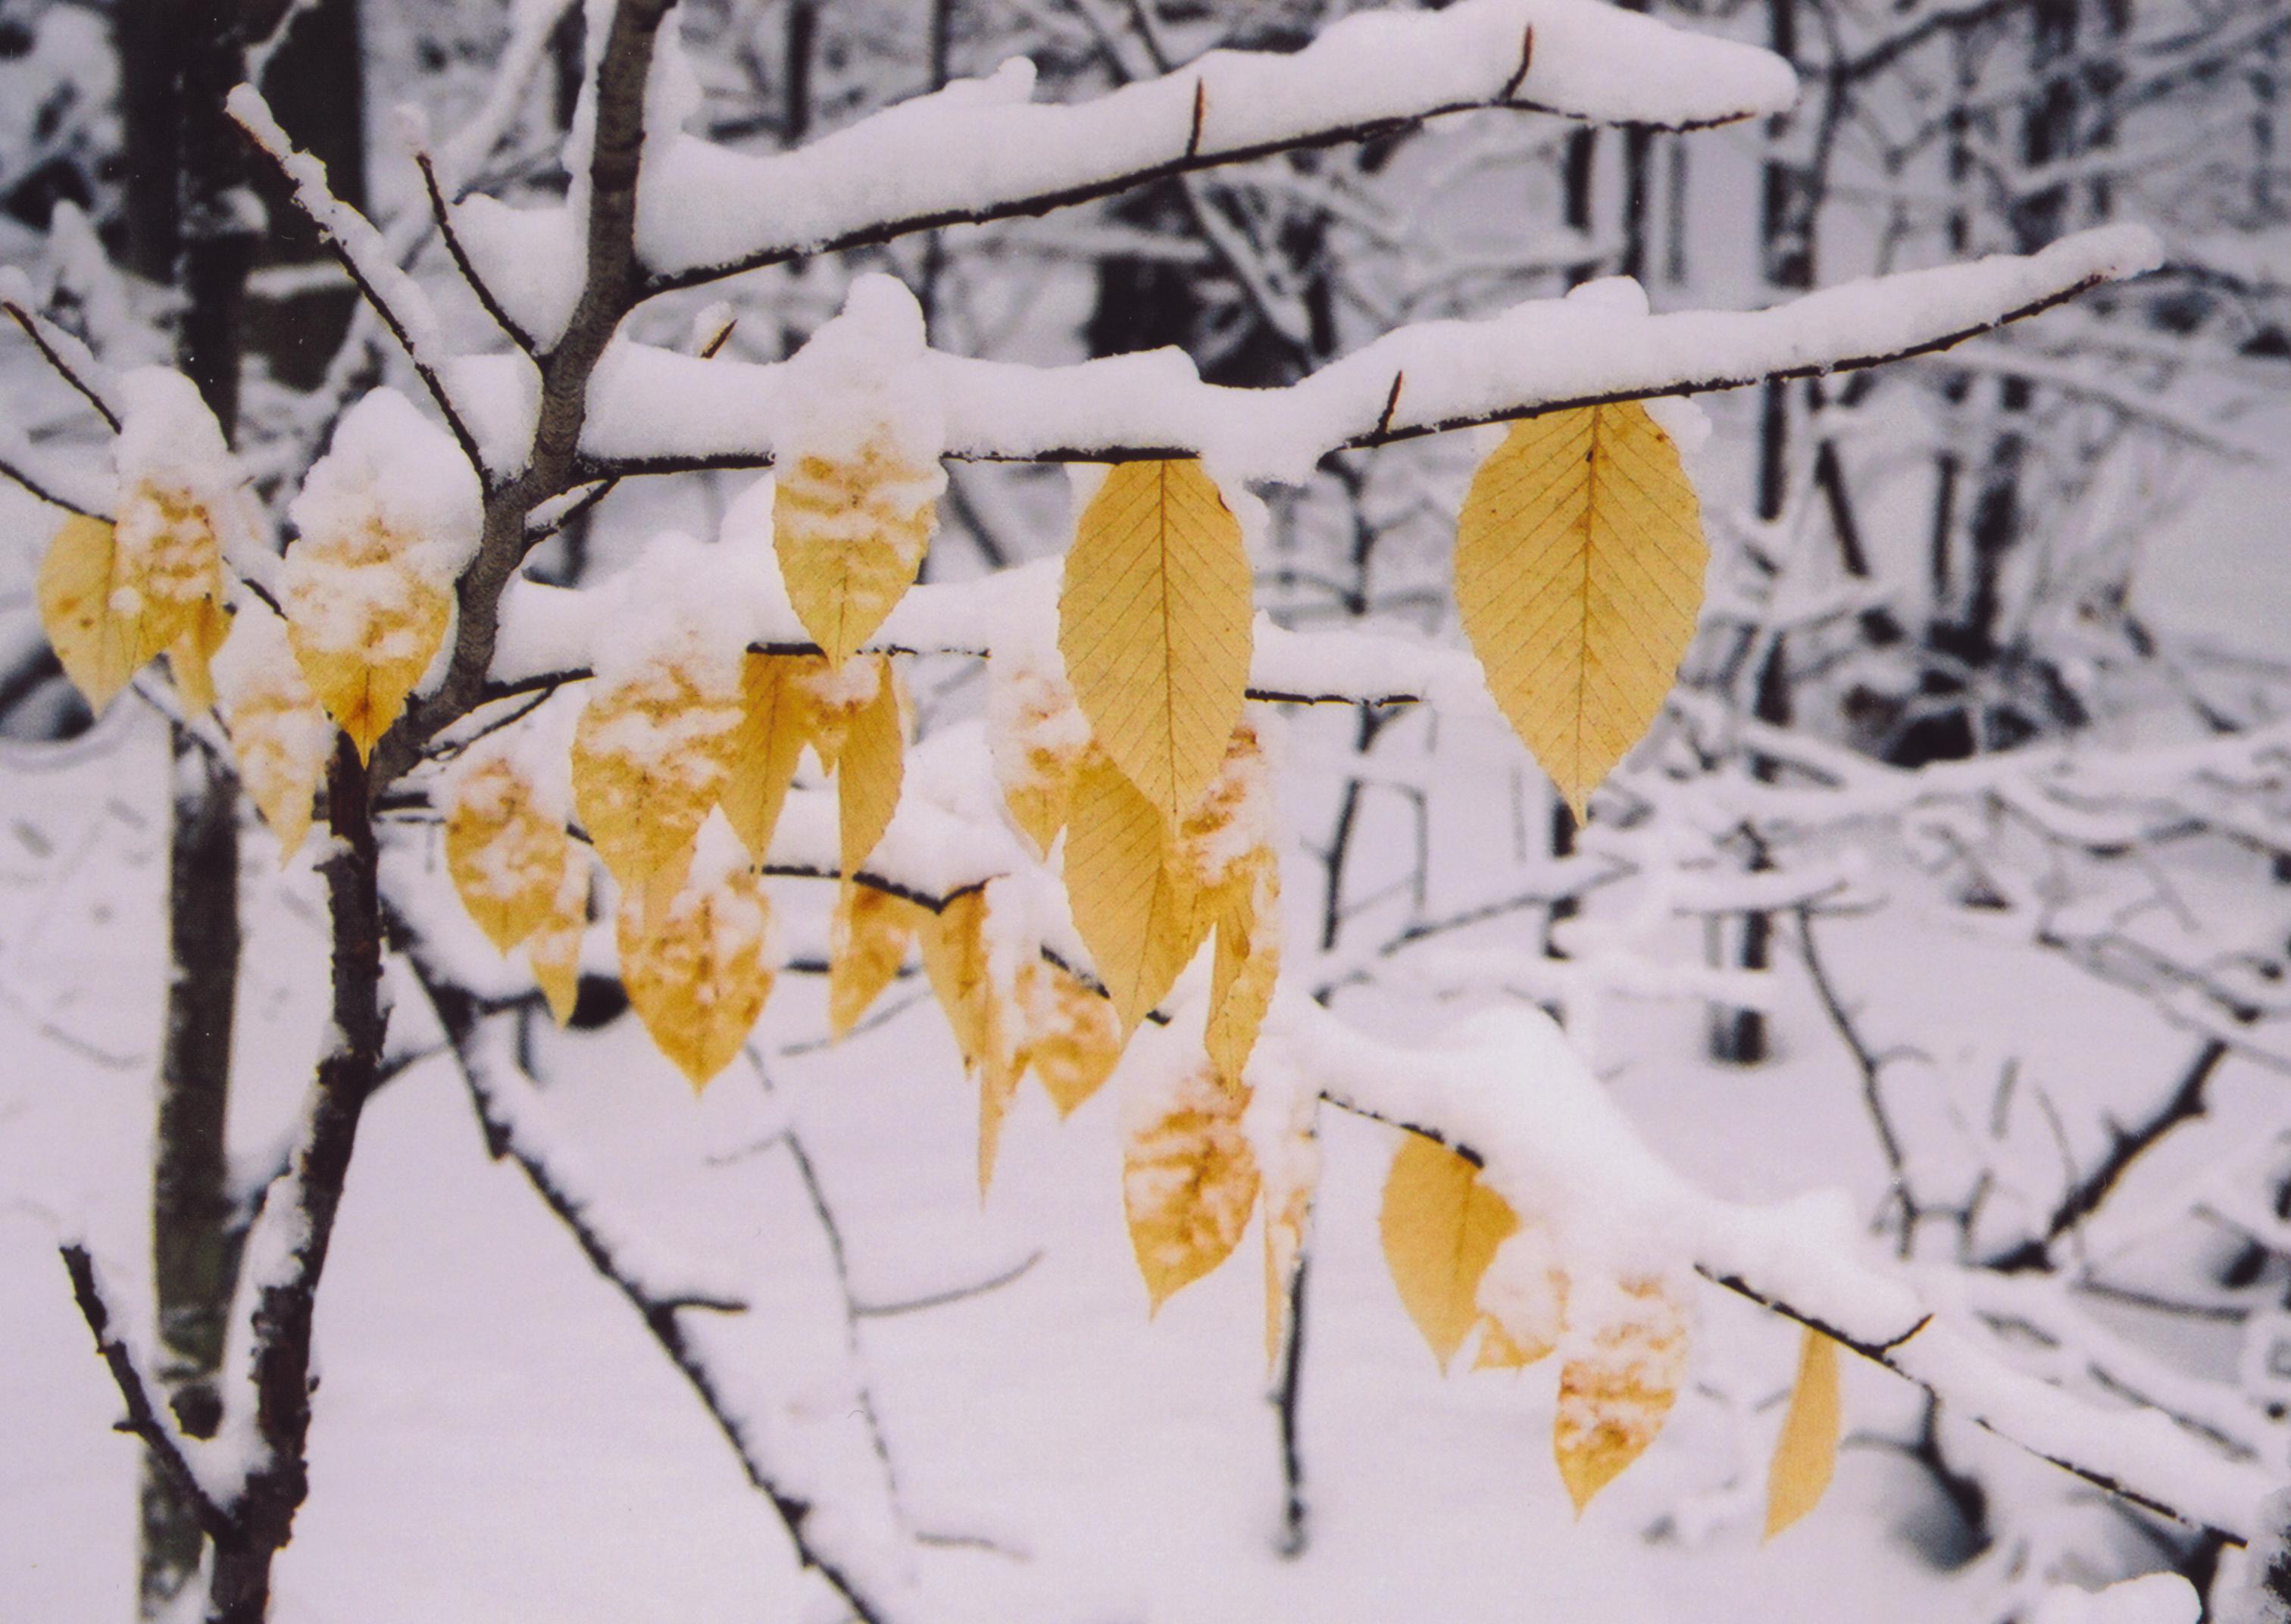 snow on Beech leaves